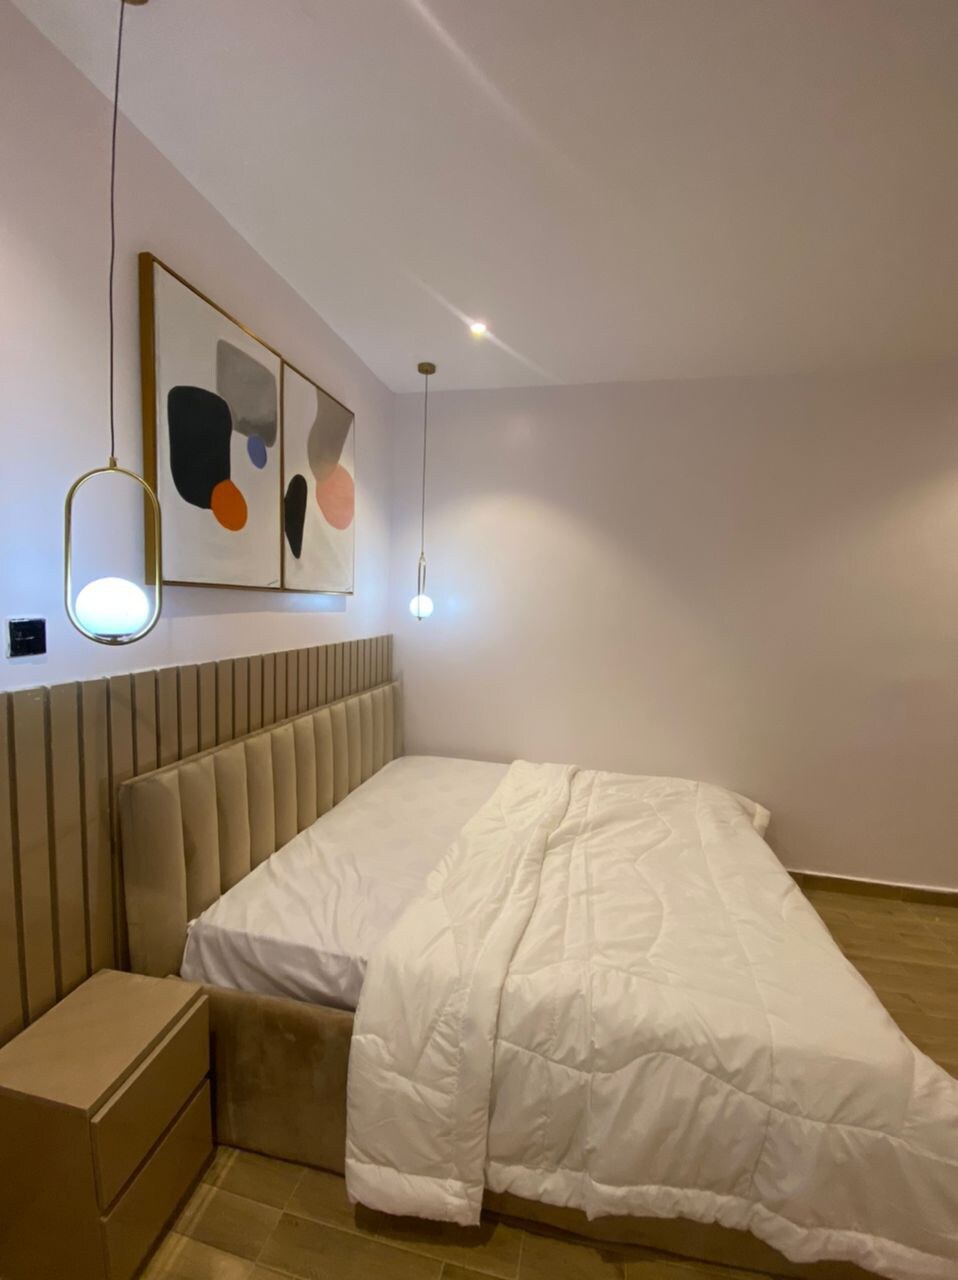 2 Bedroom Apartment in Lekki with Top Comforts